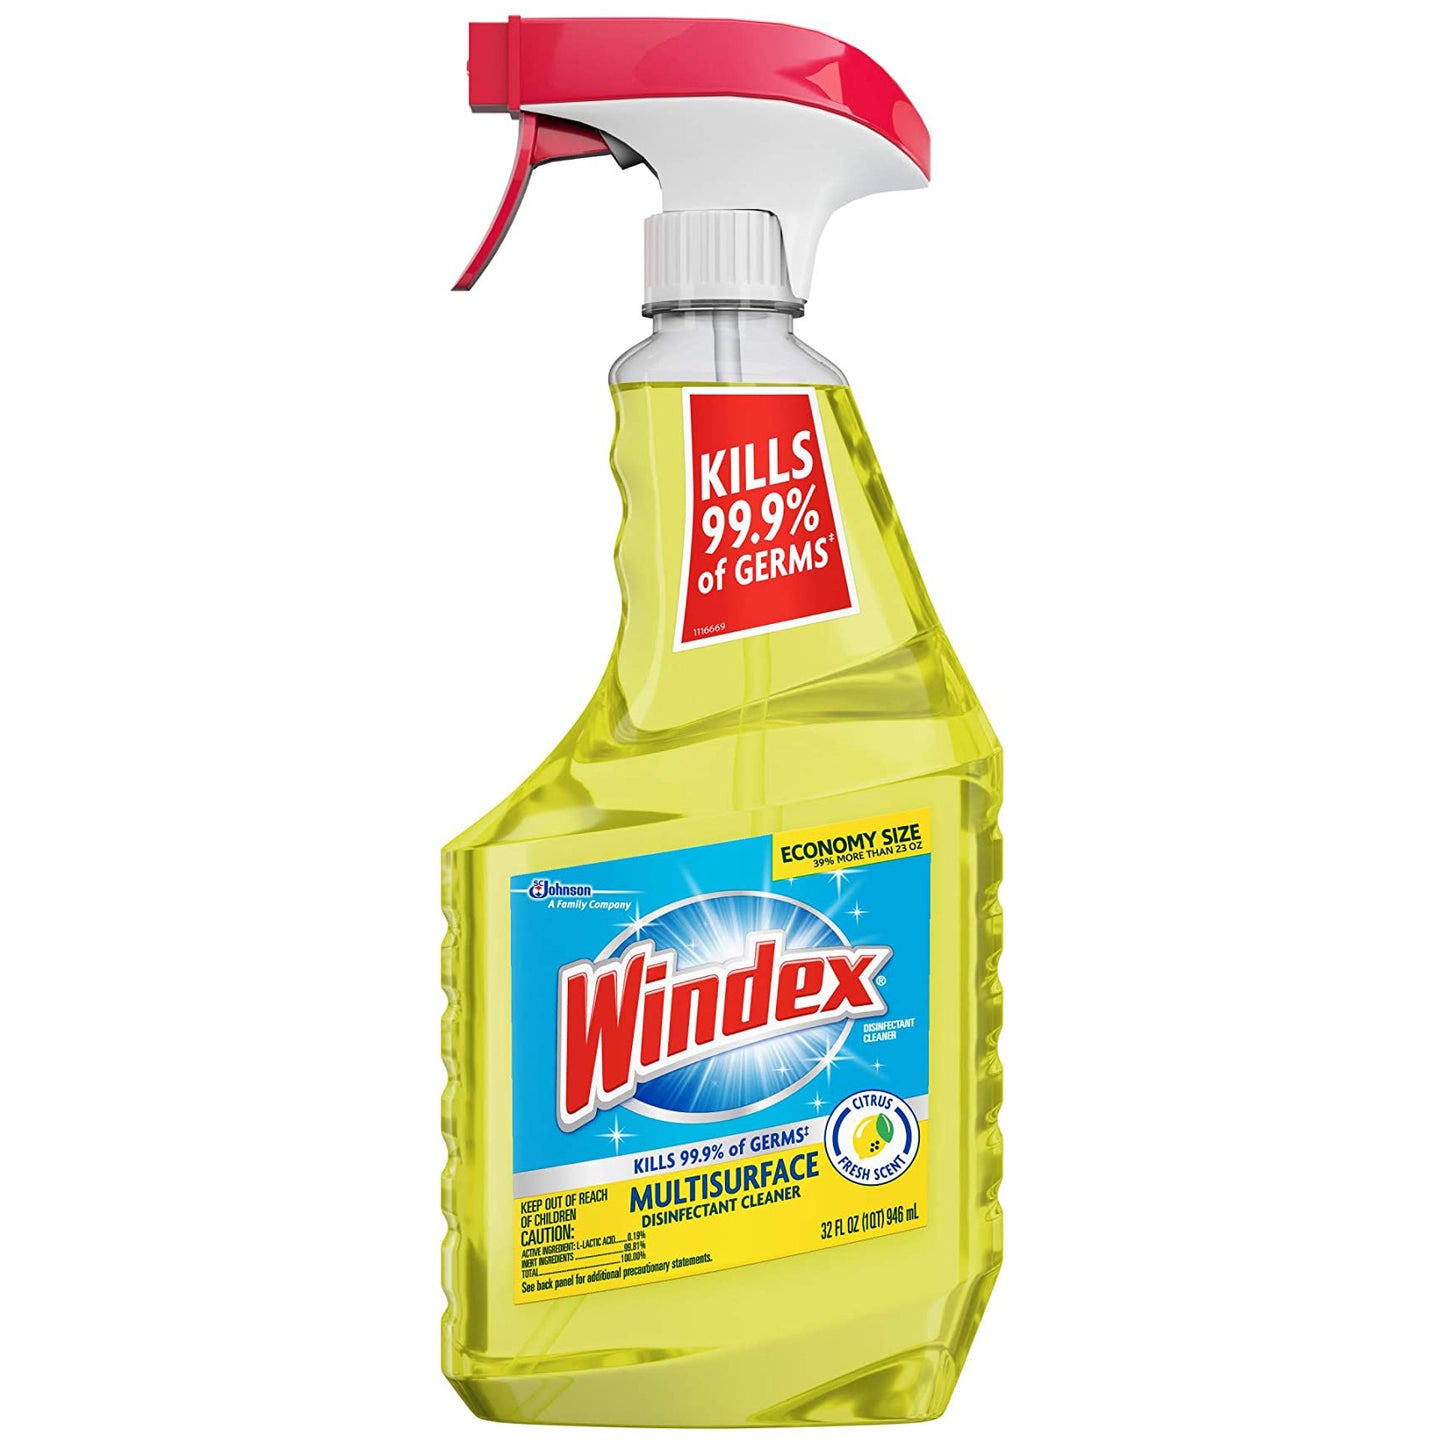 Windex MultiSurface Disinfectant Trigger Bottle Cleaner, Citrus, 32 oz (Kills 99.9% of germs)